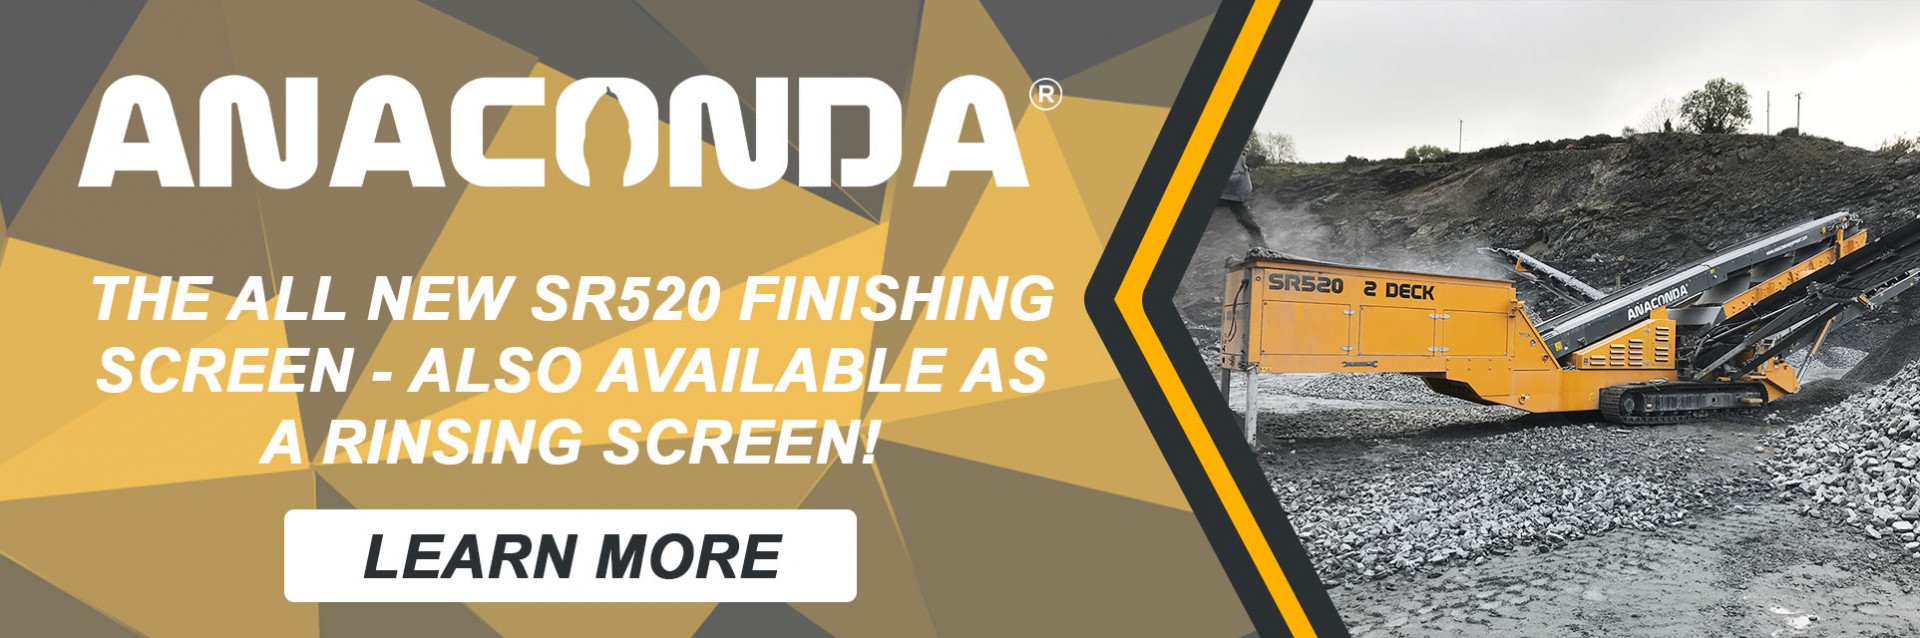 The all New SR520 Finishing Screen by Anaconda Equipment